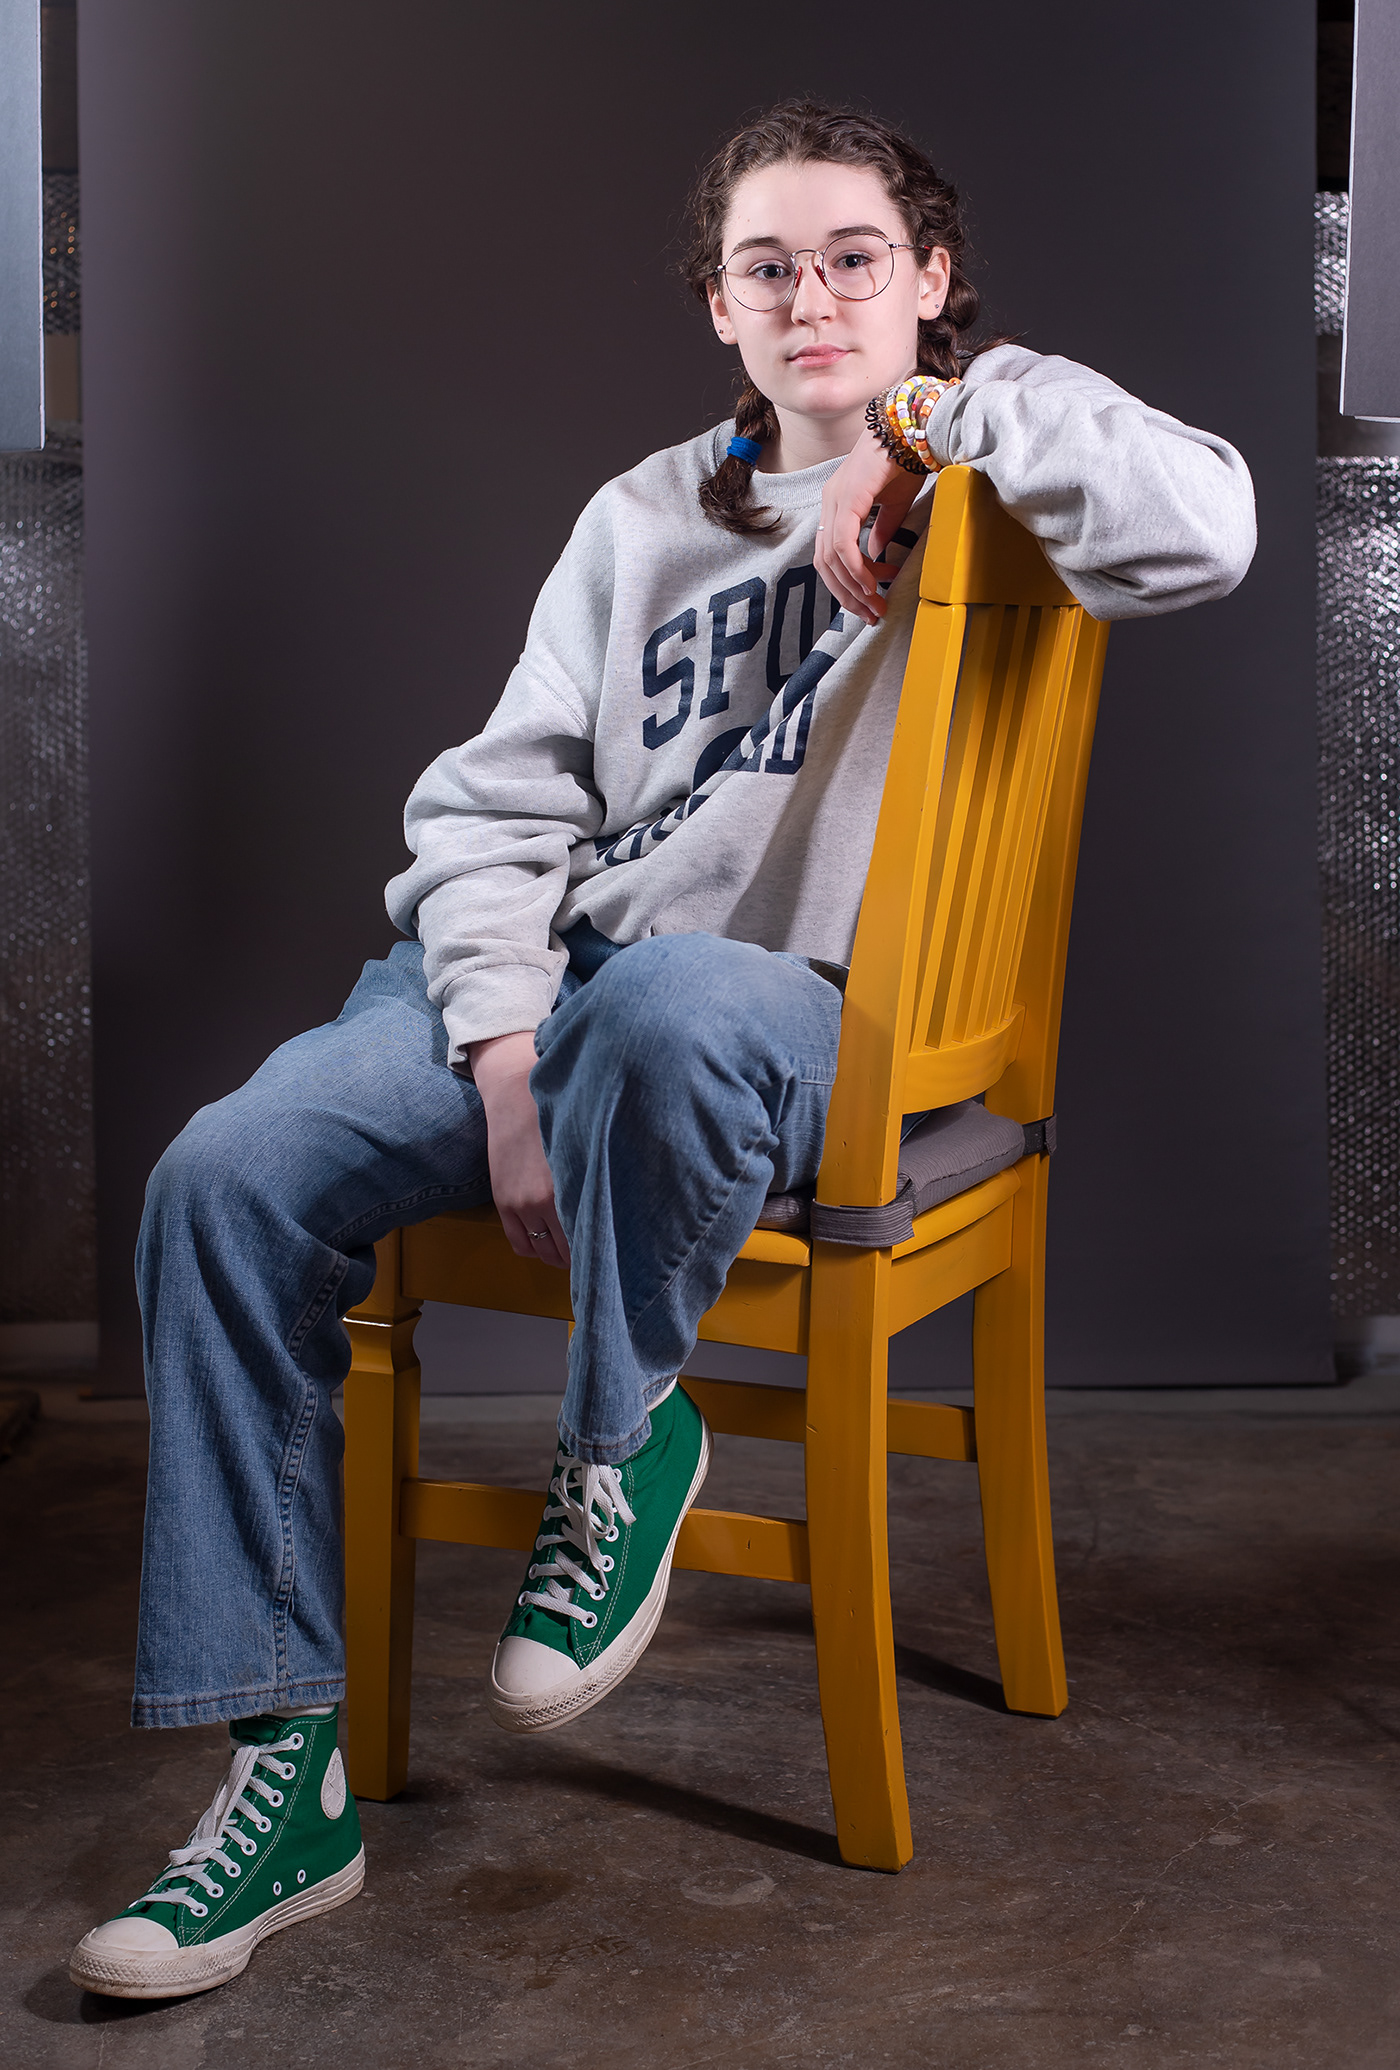 headshots kids location mixed light portrait Portraiture studio teens